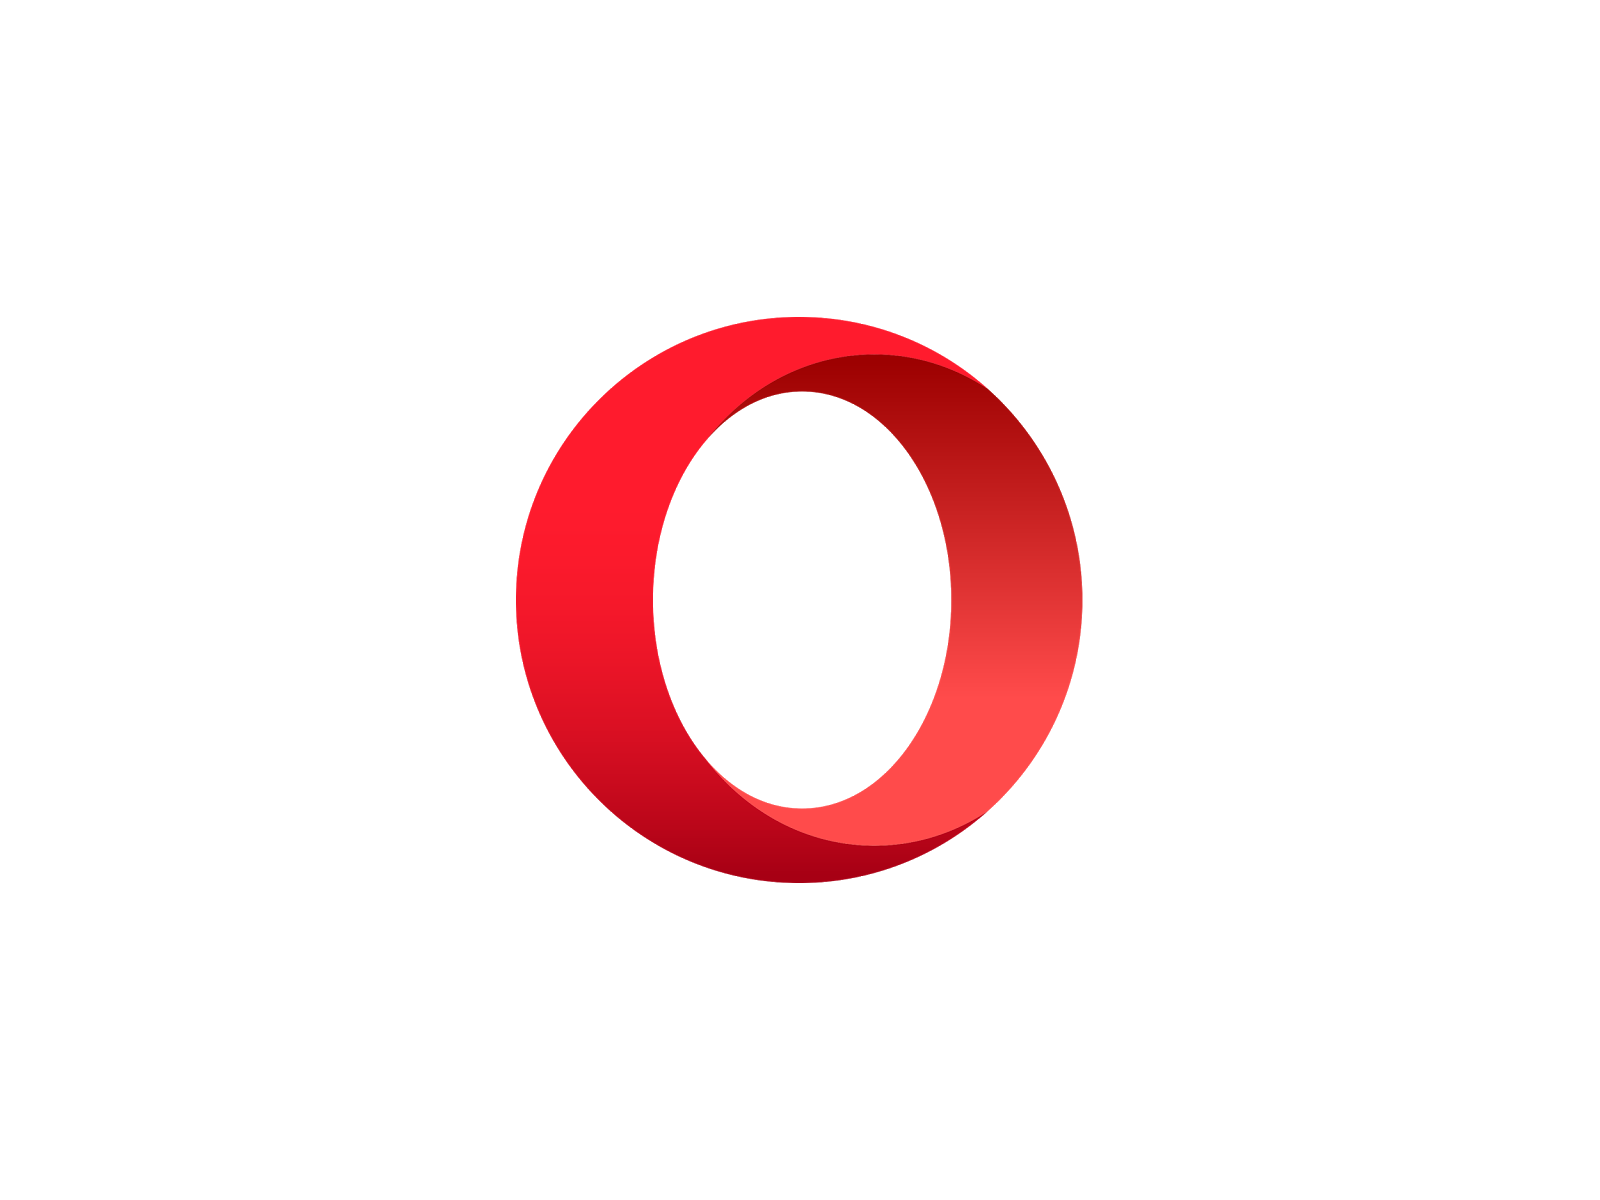 Opera Logos Png Images Free D